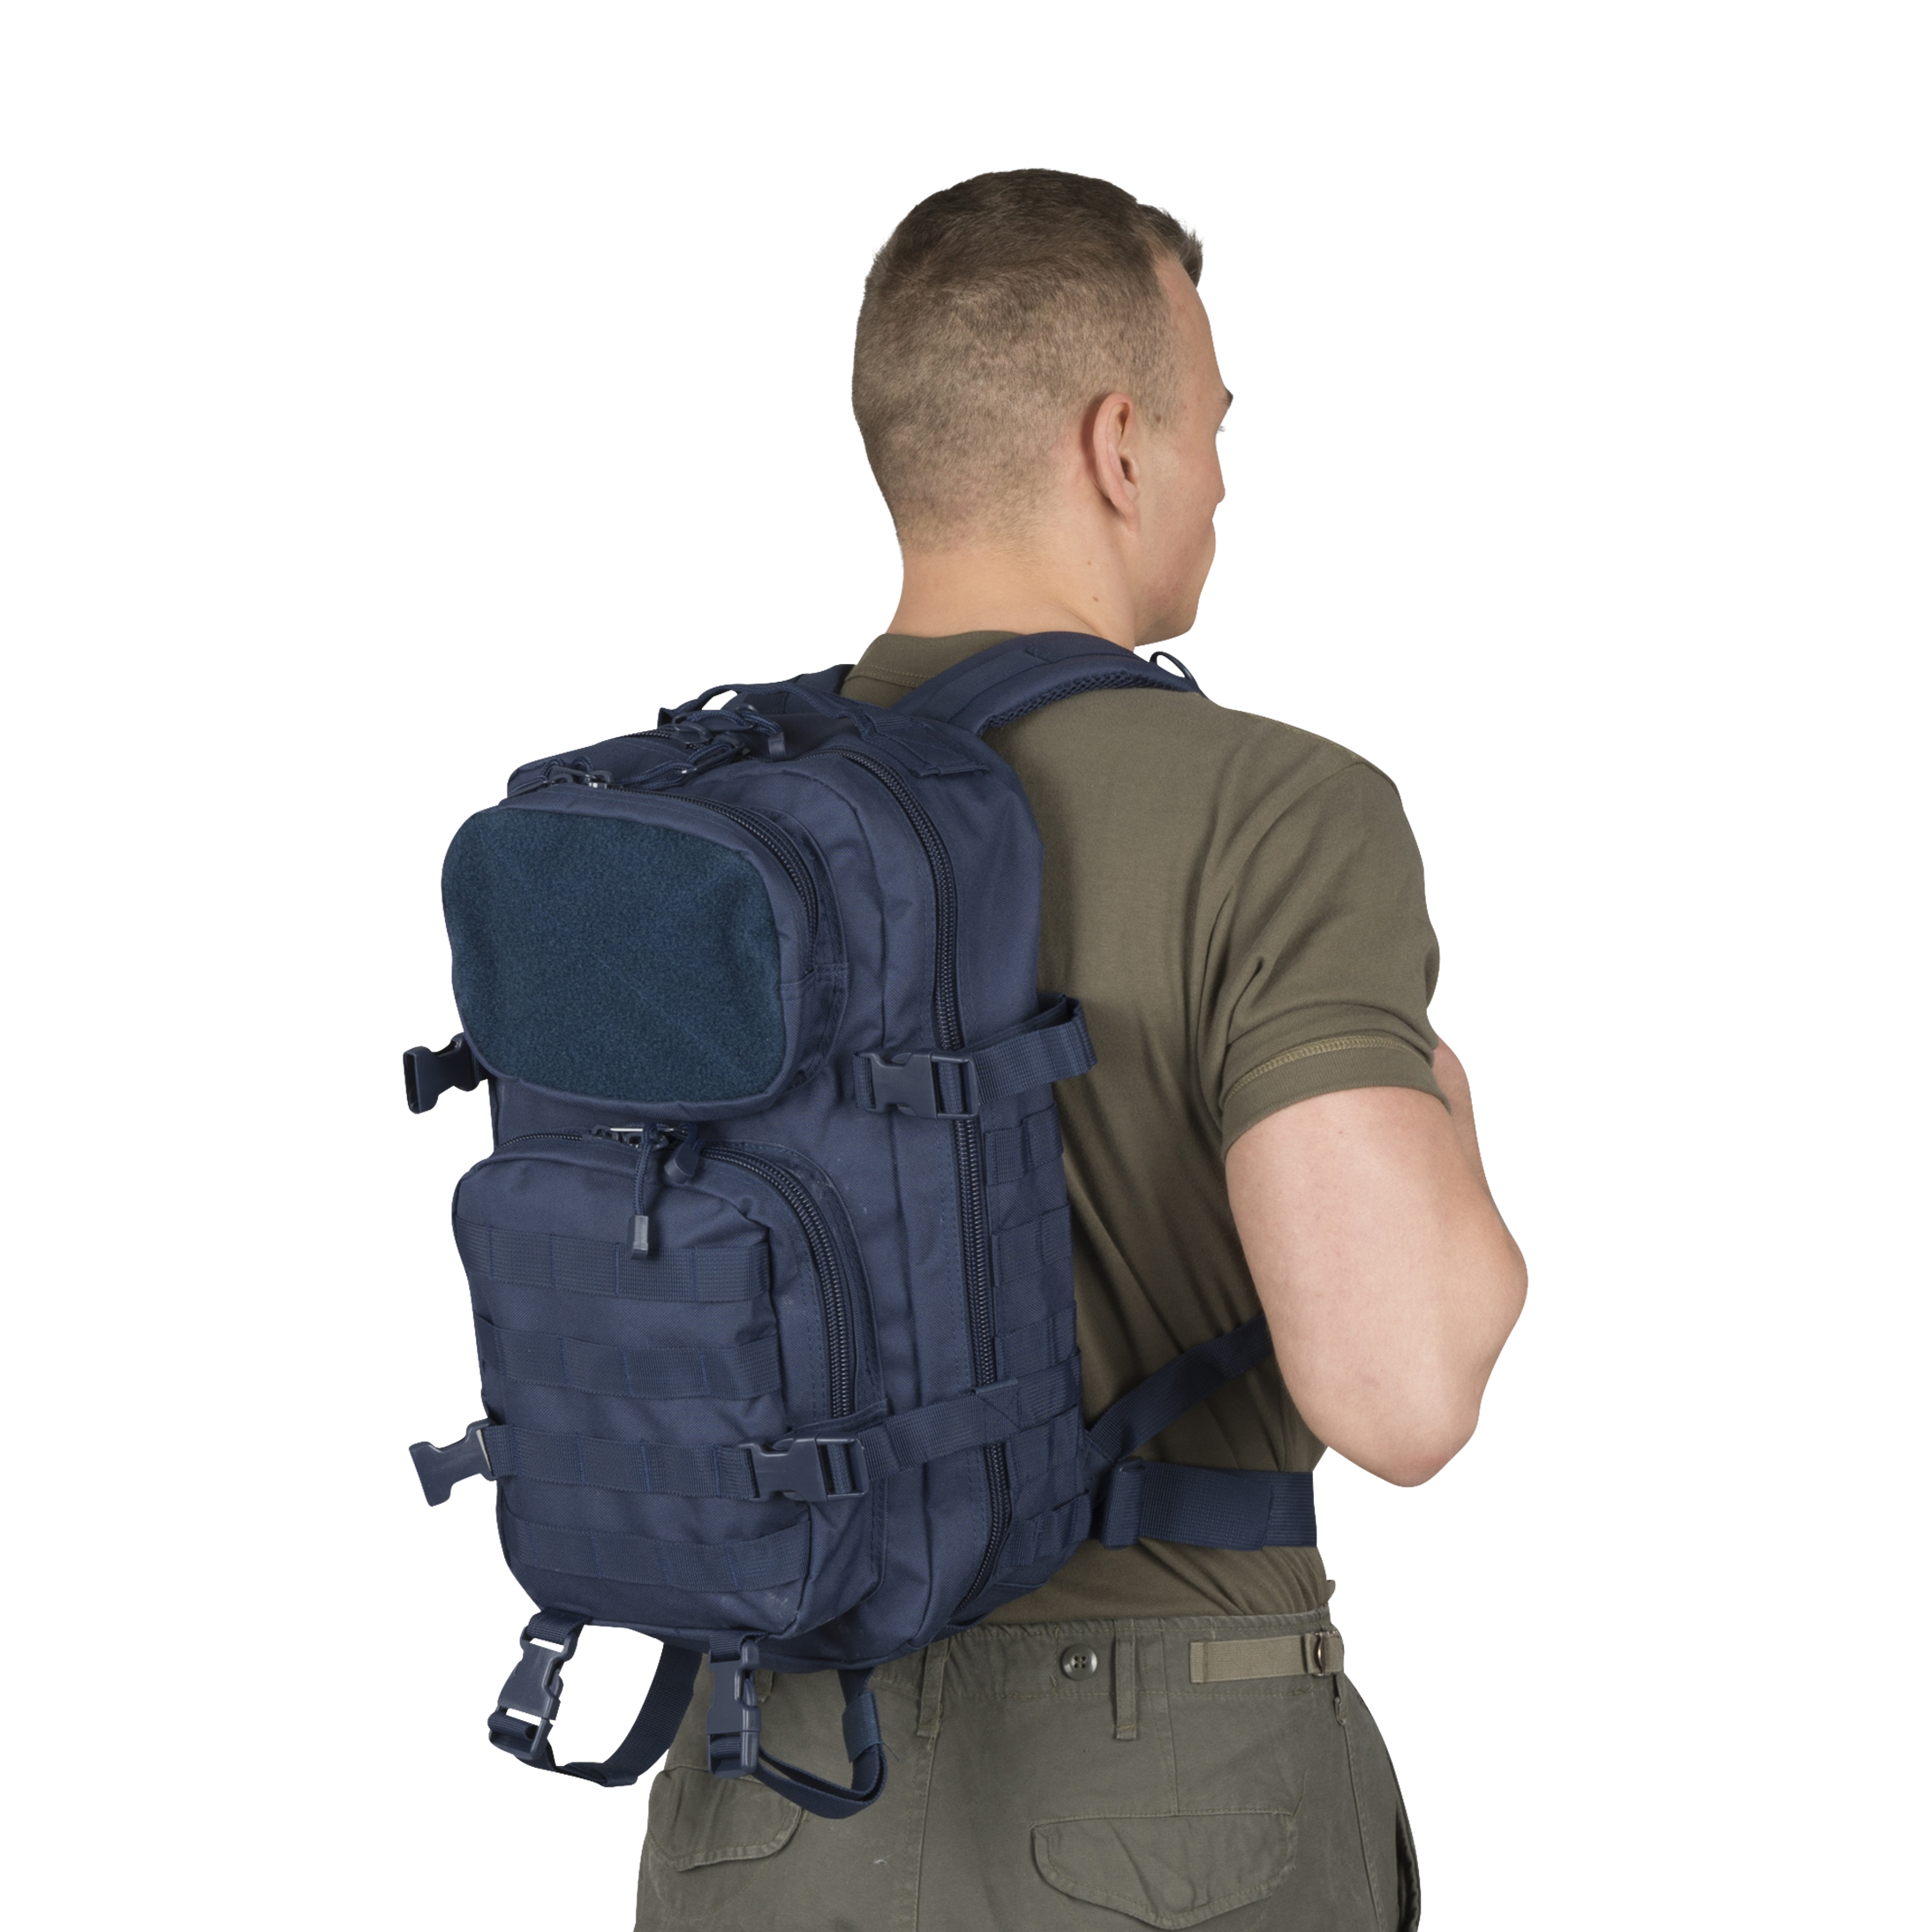 Brandit US Cooper Backpack - Navy 25L - Lowest Price Guarantee | 24MX